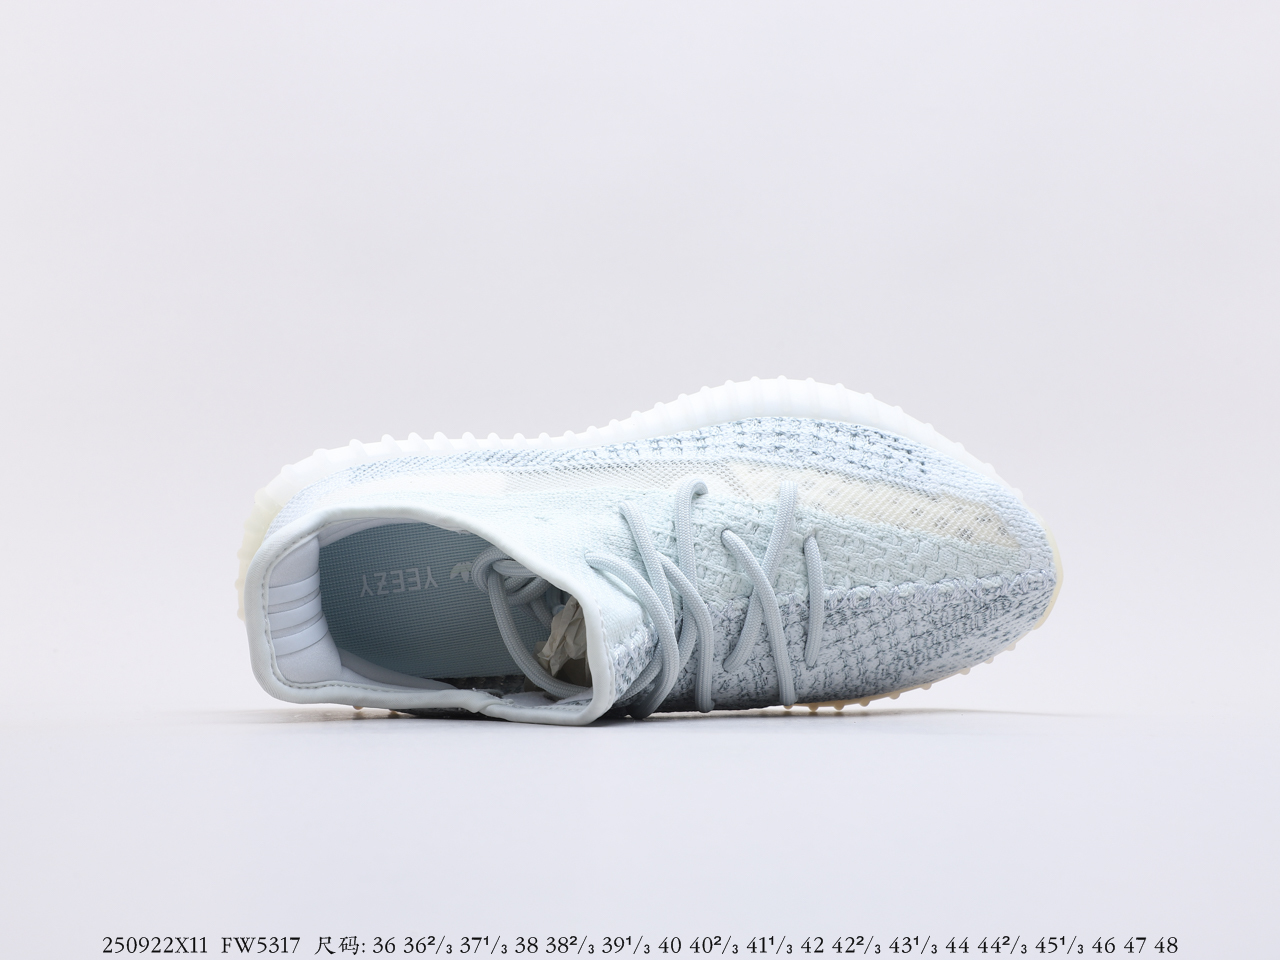 莆田鞋阿迪达斯 Adidas Yeezy Boost 350 V2 “Cloud White Reflective” 云白冰蓝满天星(图3)